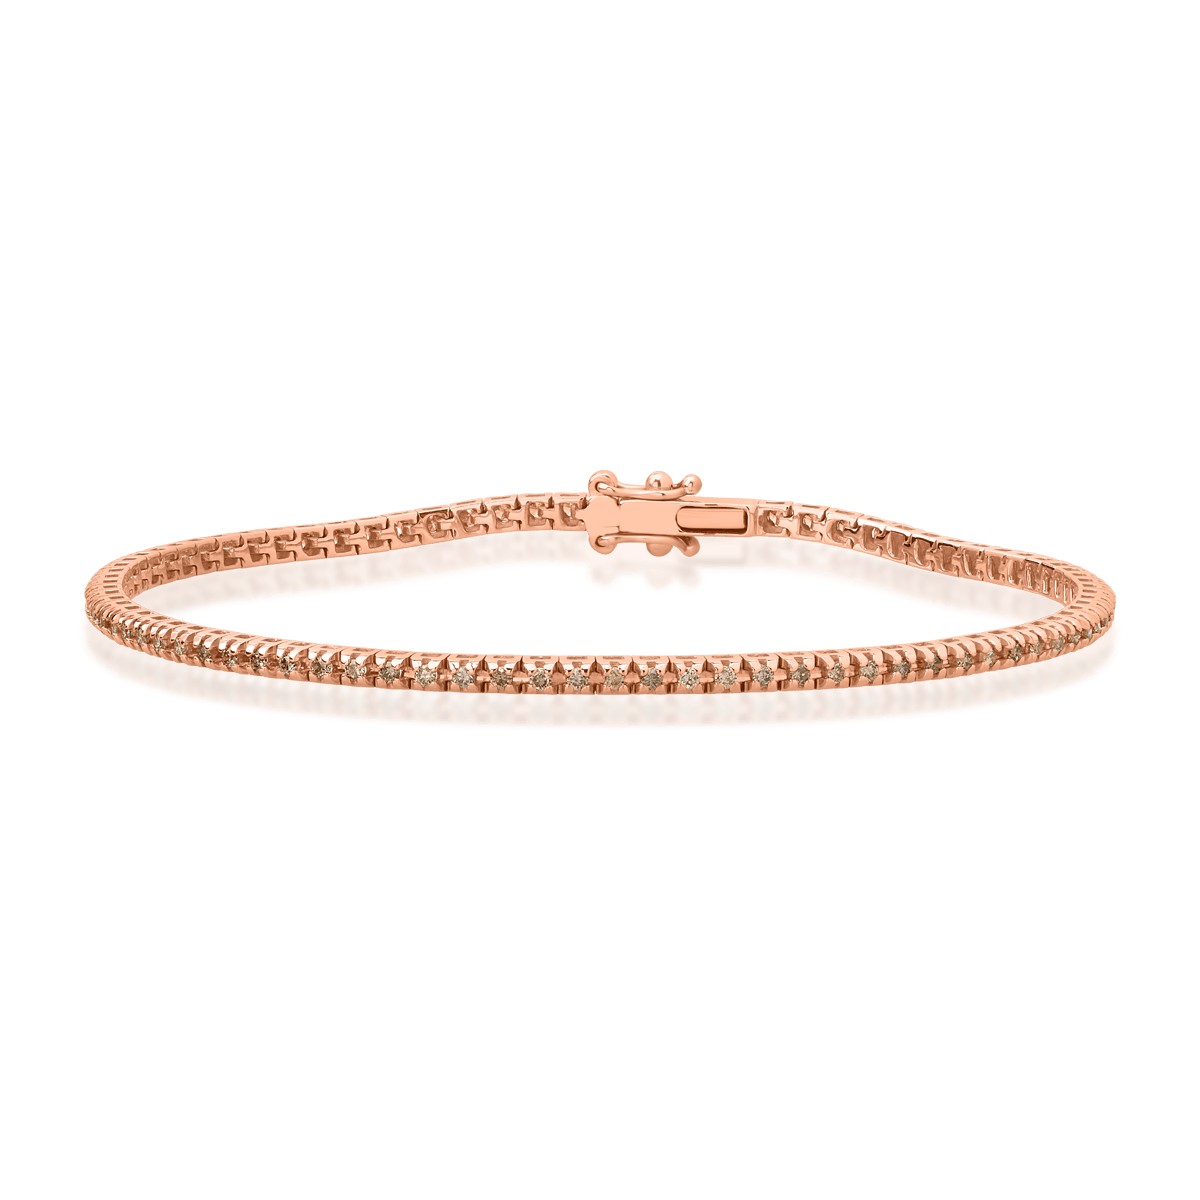 18K rose gold bracelet with 0.7ct brown diamonds